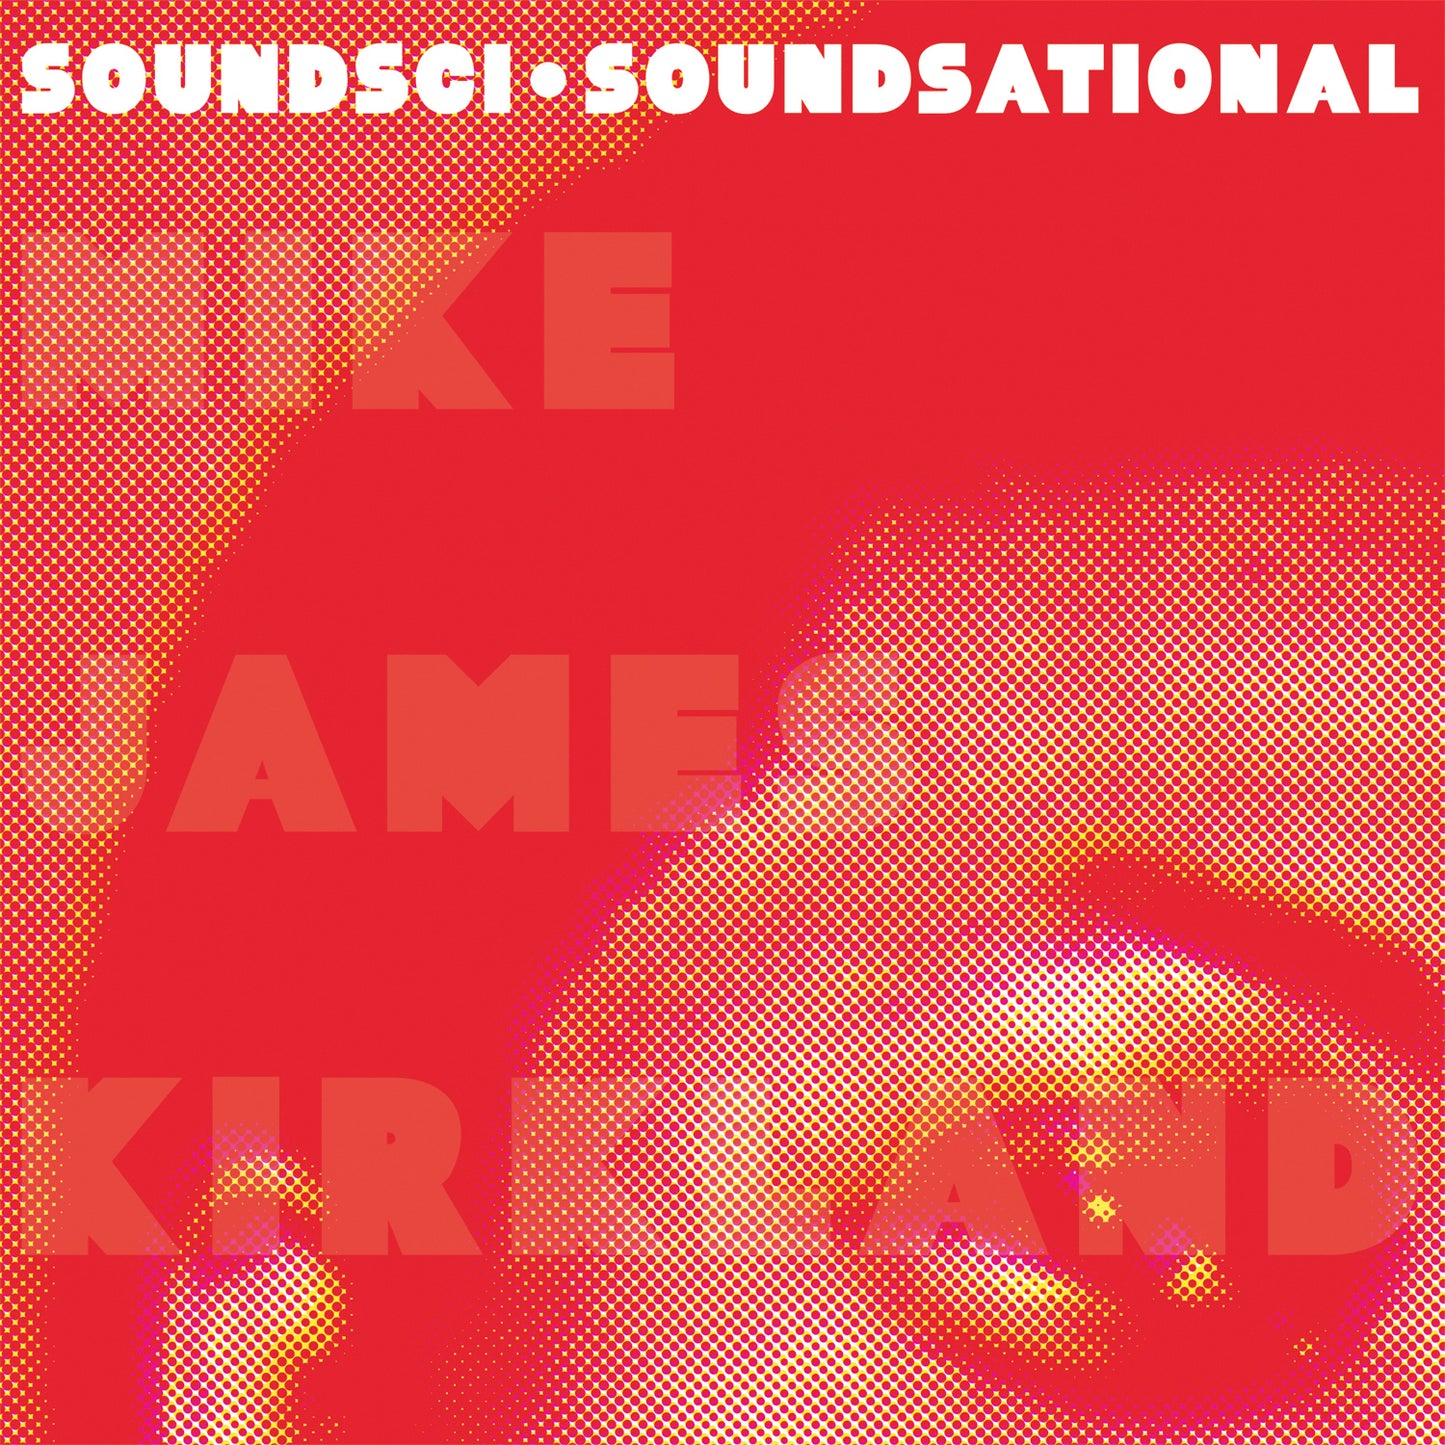 Soundsci "Soundsational" LP